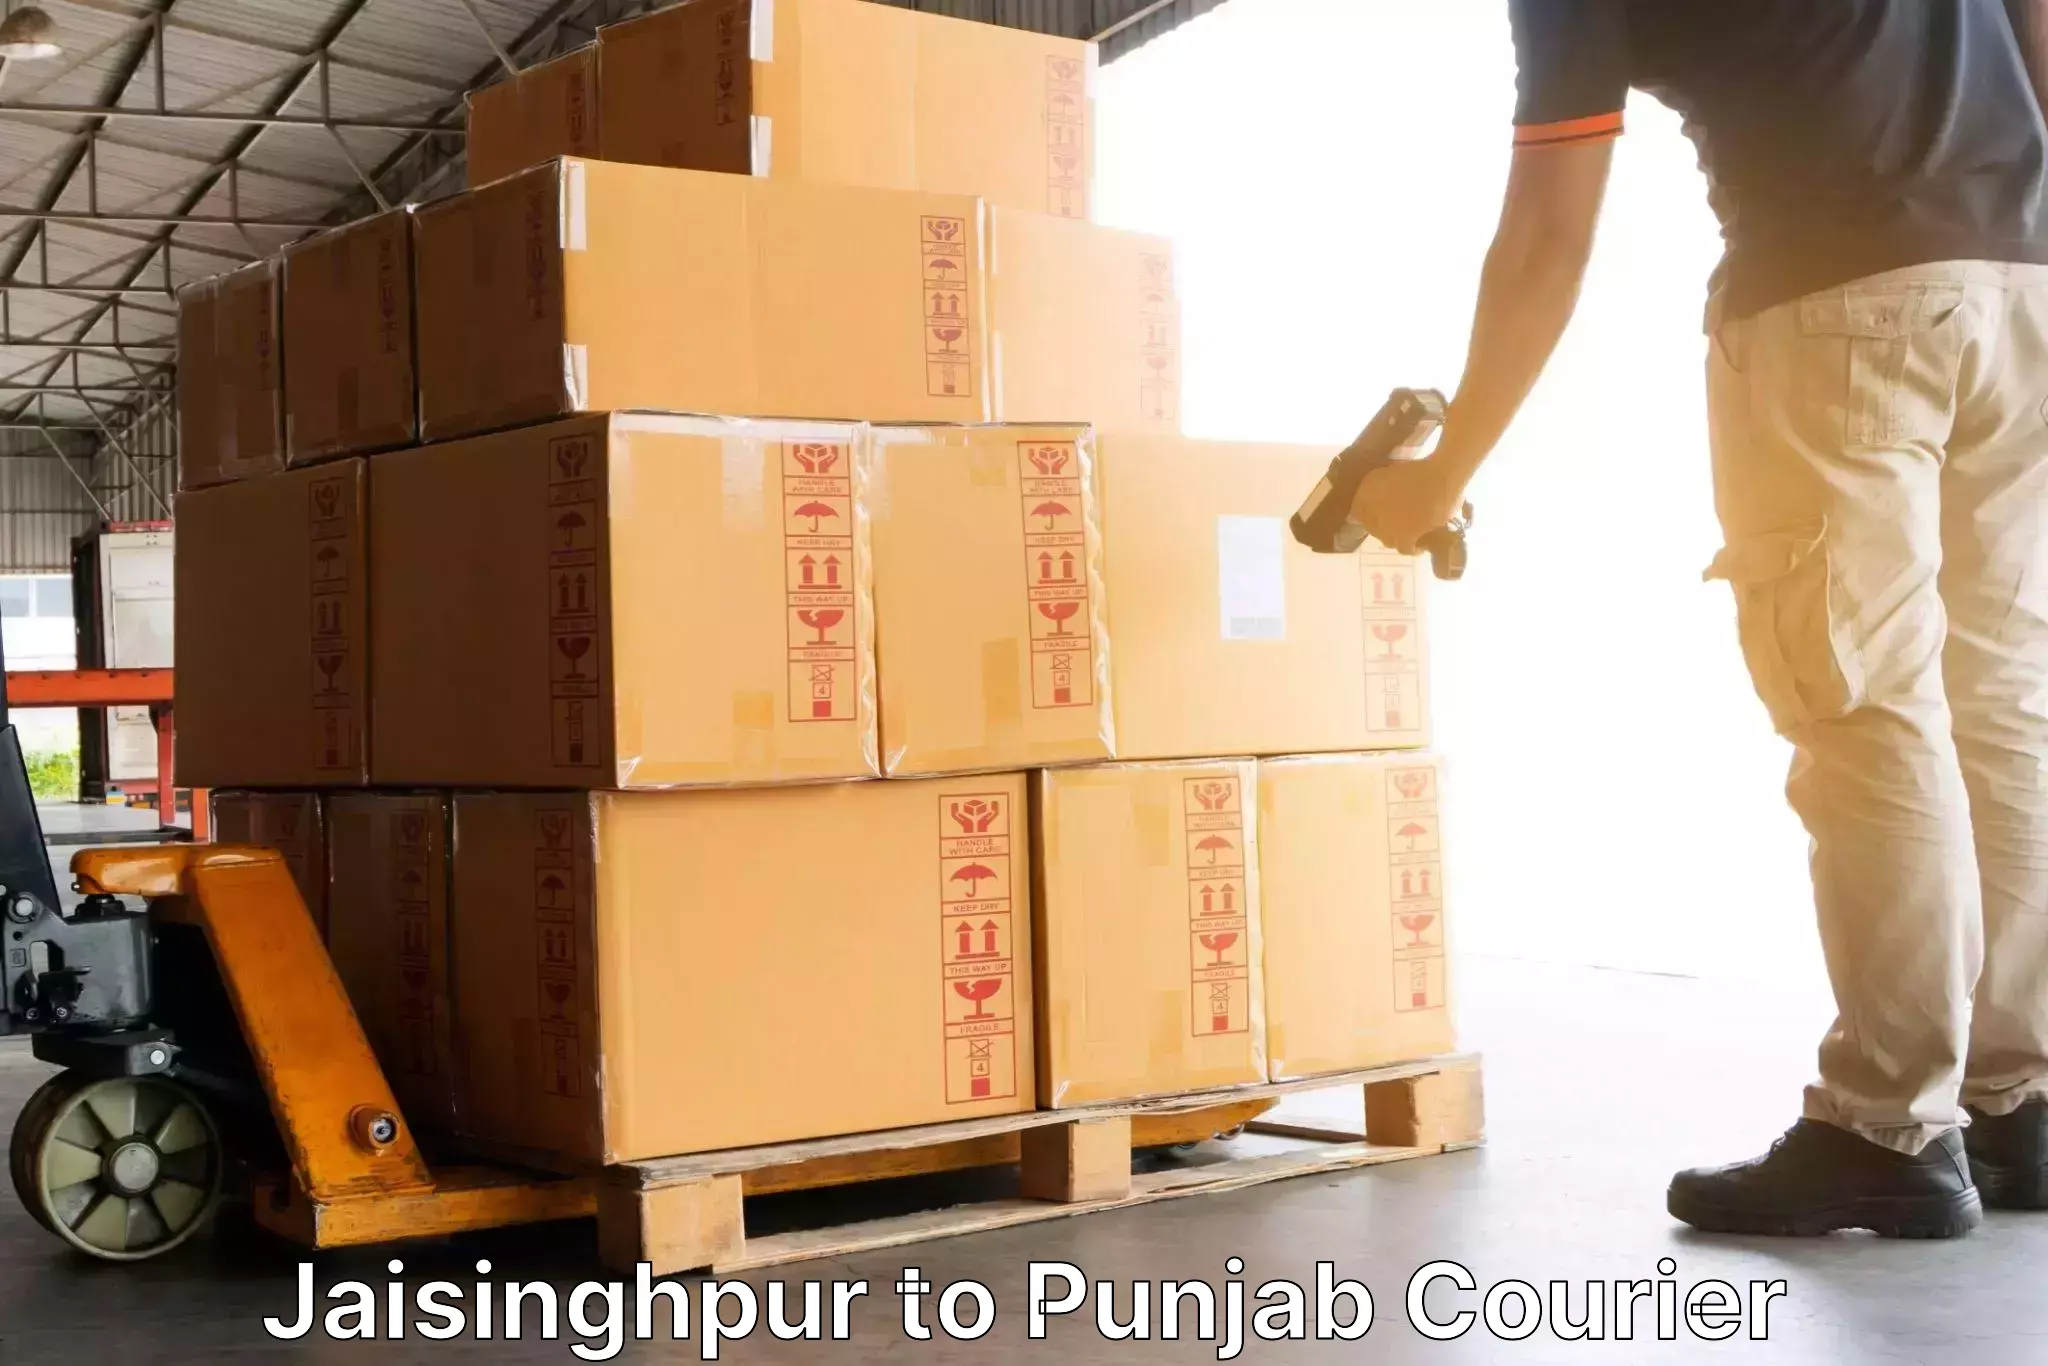 Package tracking in Jaisinghpur to Mansa